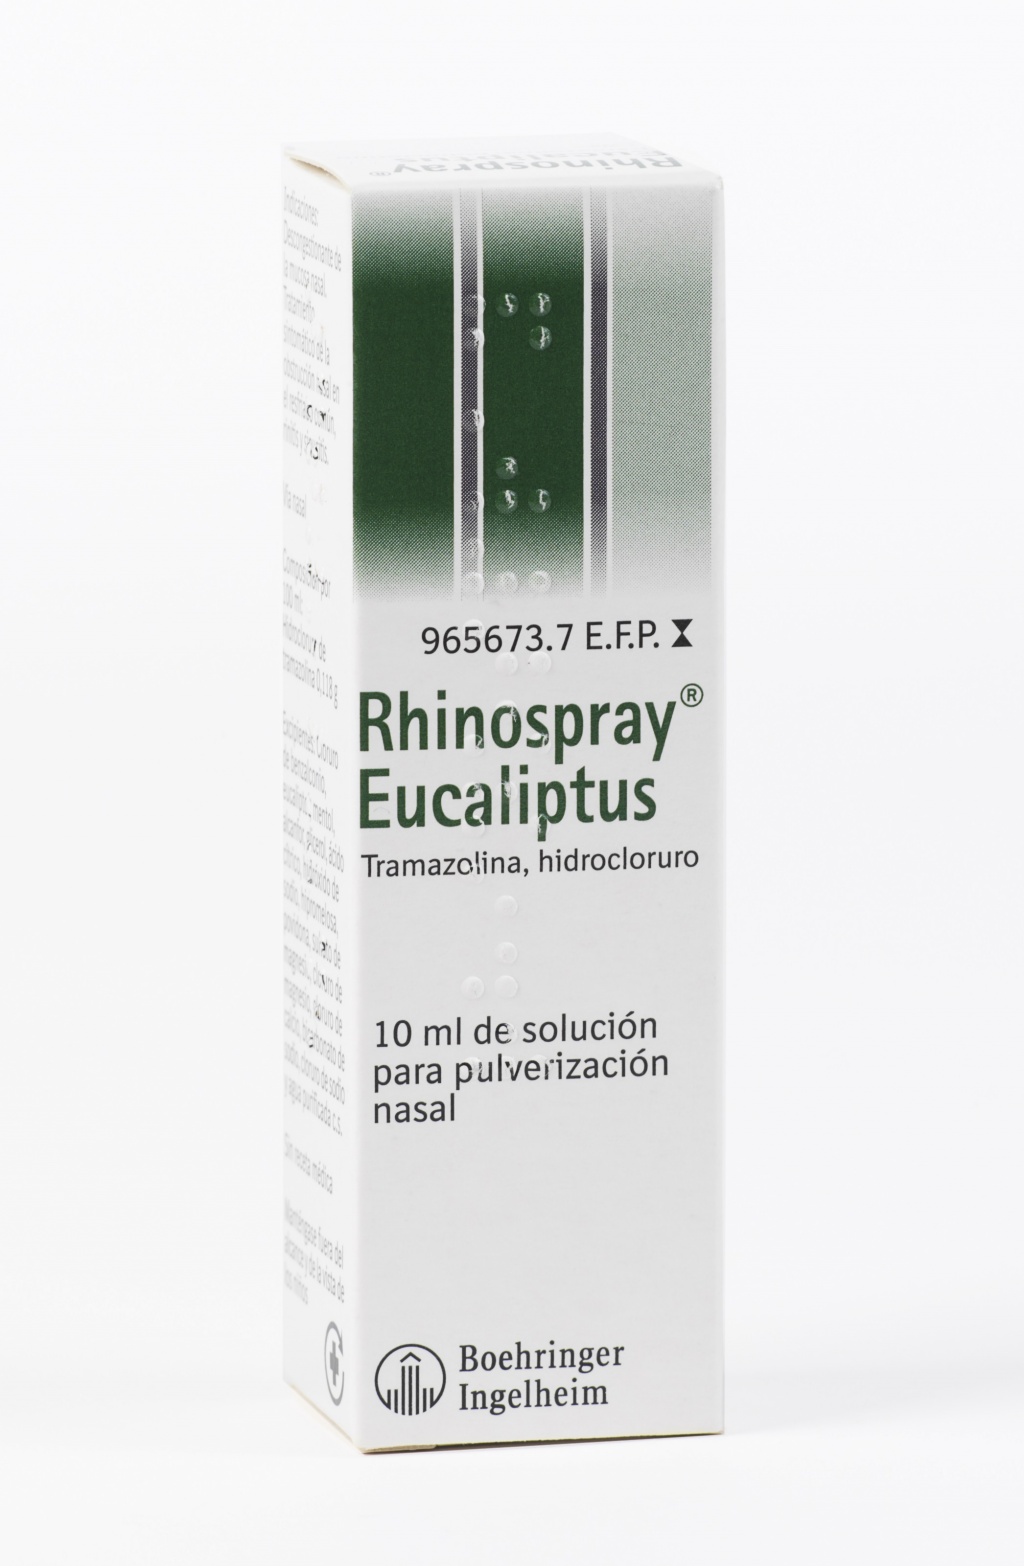 Rhinospray eucaliptus nebulizador nasal 10 ml